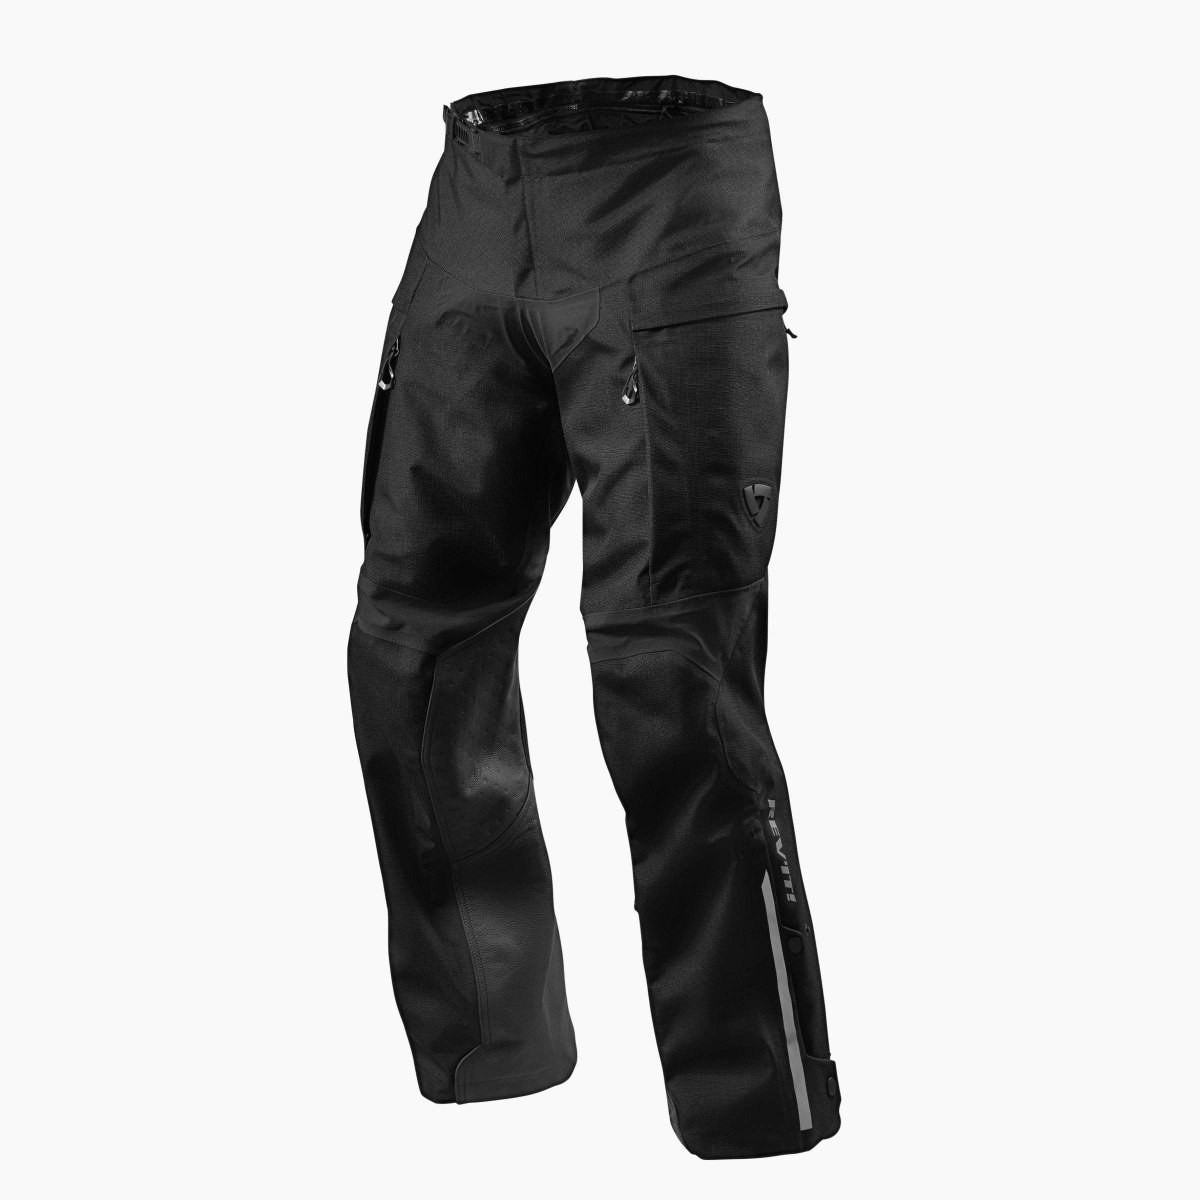 Image of REV'IT! Component H2O Long Black Motorcycle Pants Talla L